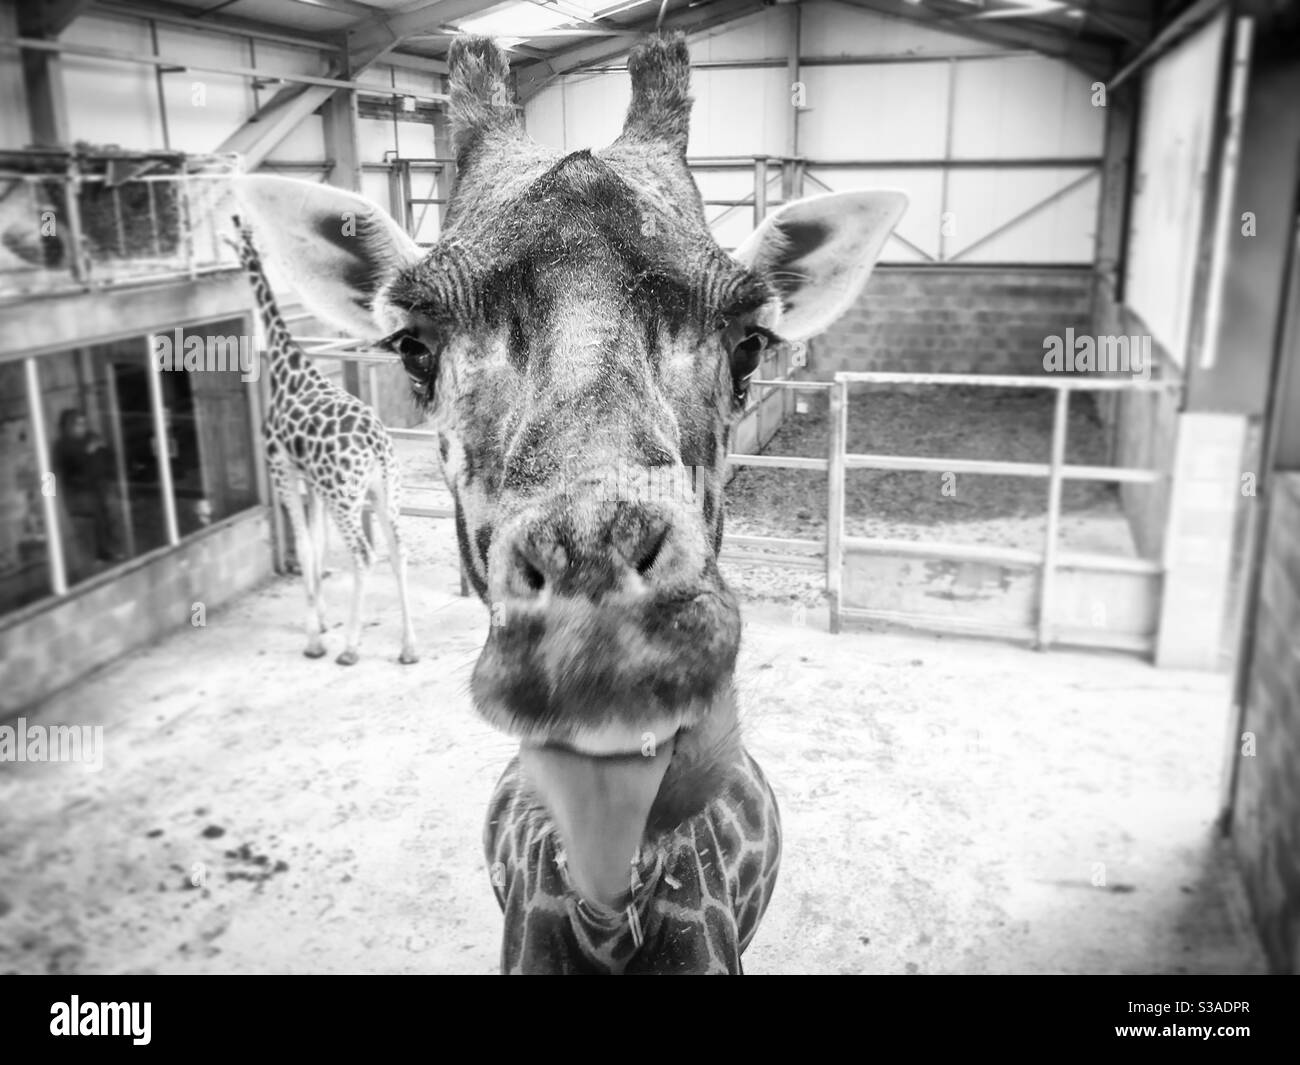 Cheeky giraffe at the zoo Stock Photo